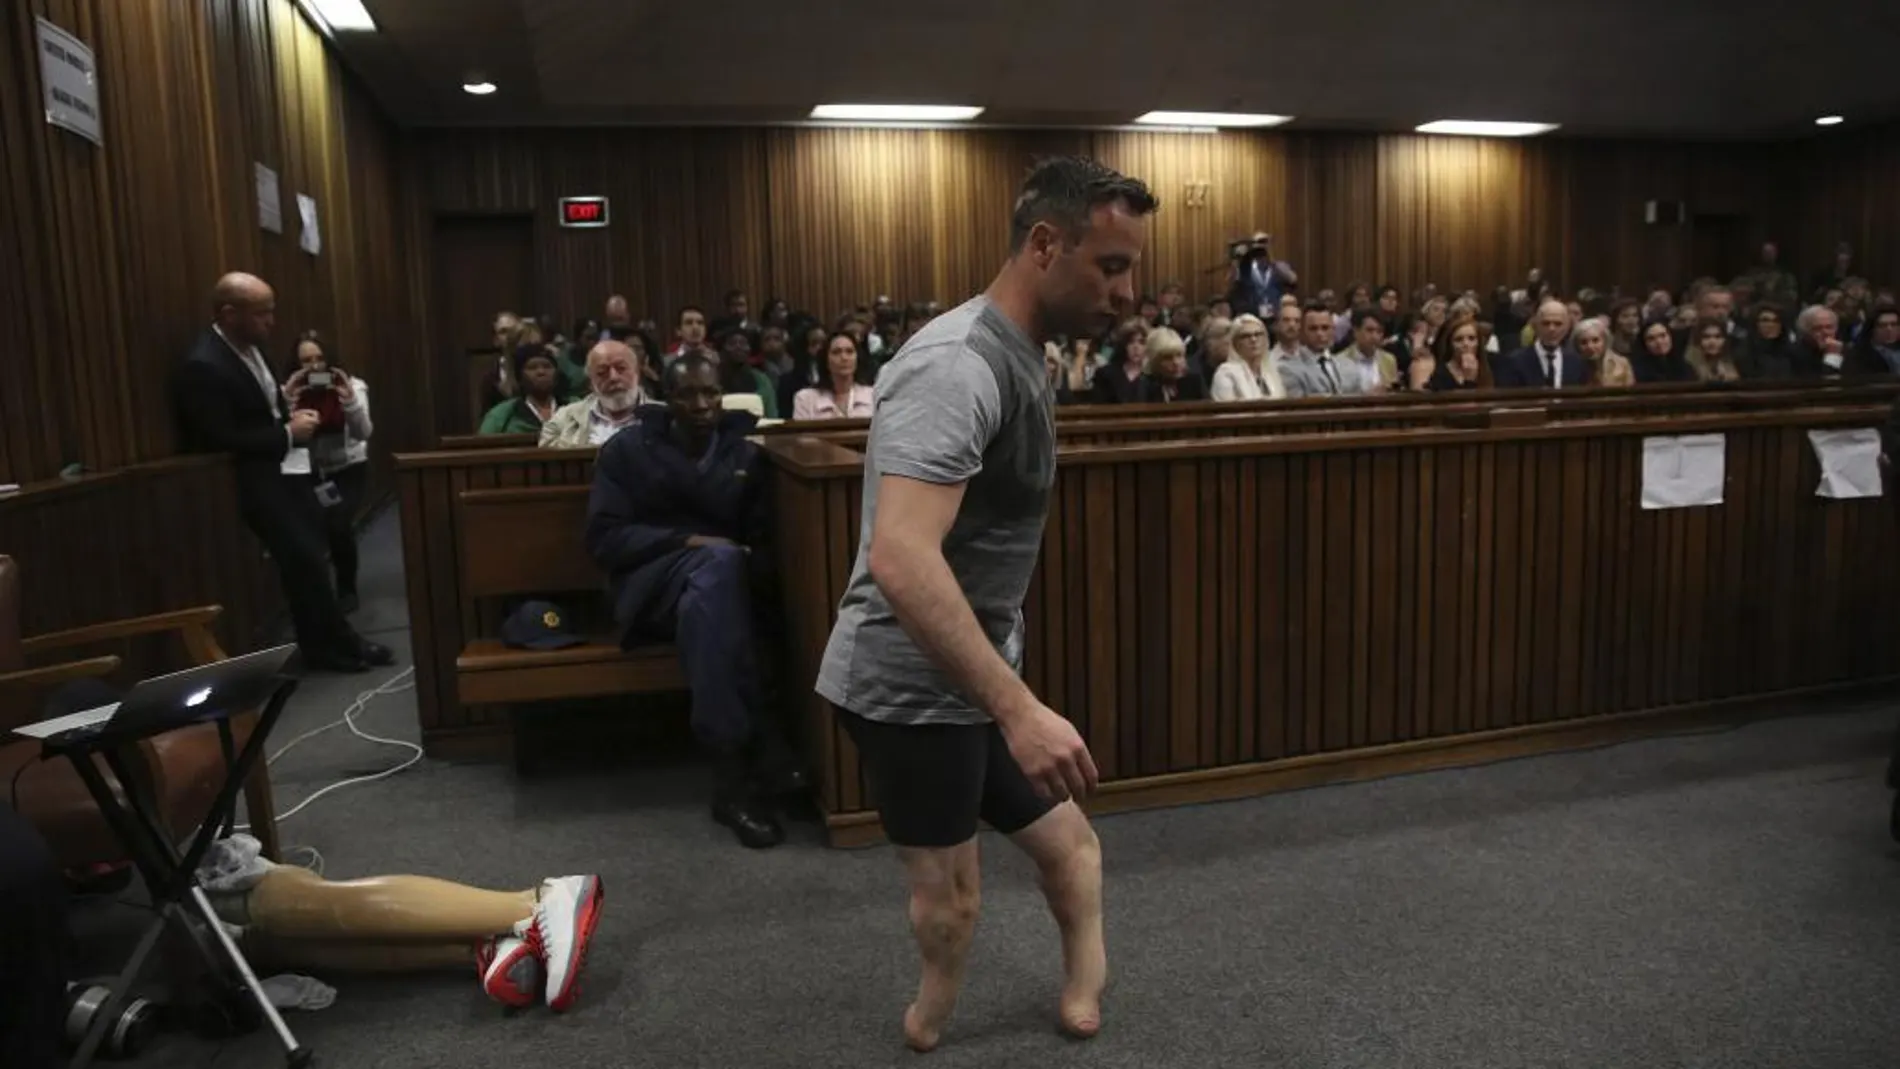 El atleta paralímpico Oscar Pistorius camina por la sala del Tribunal Superior de Pretoria sin sus prótesis